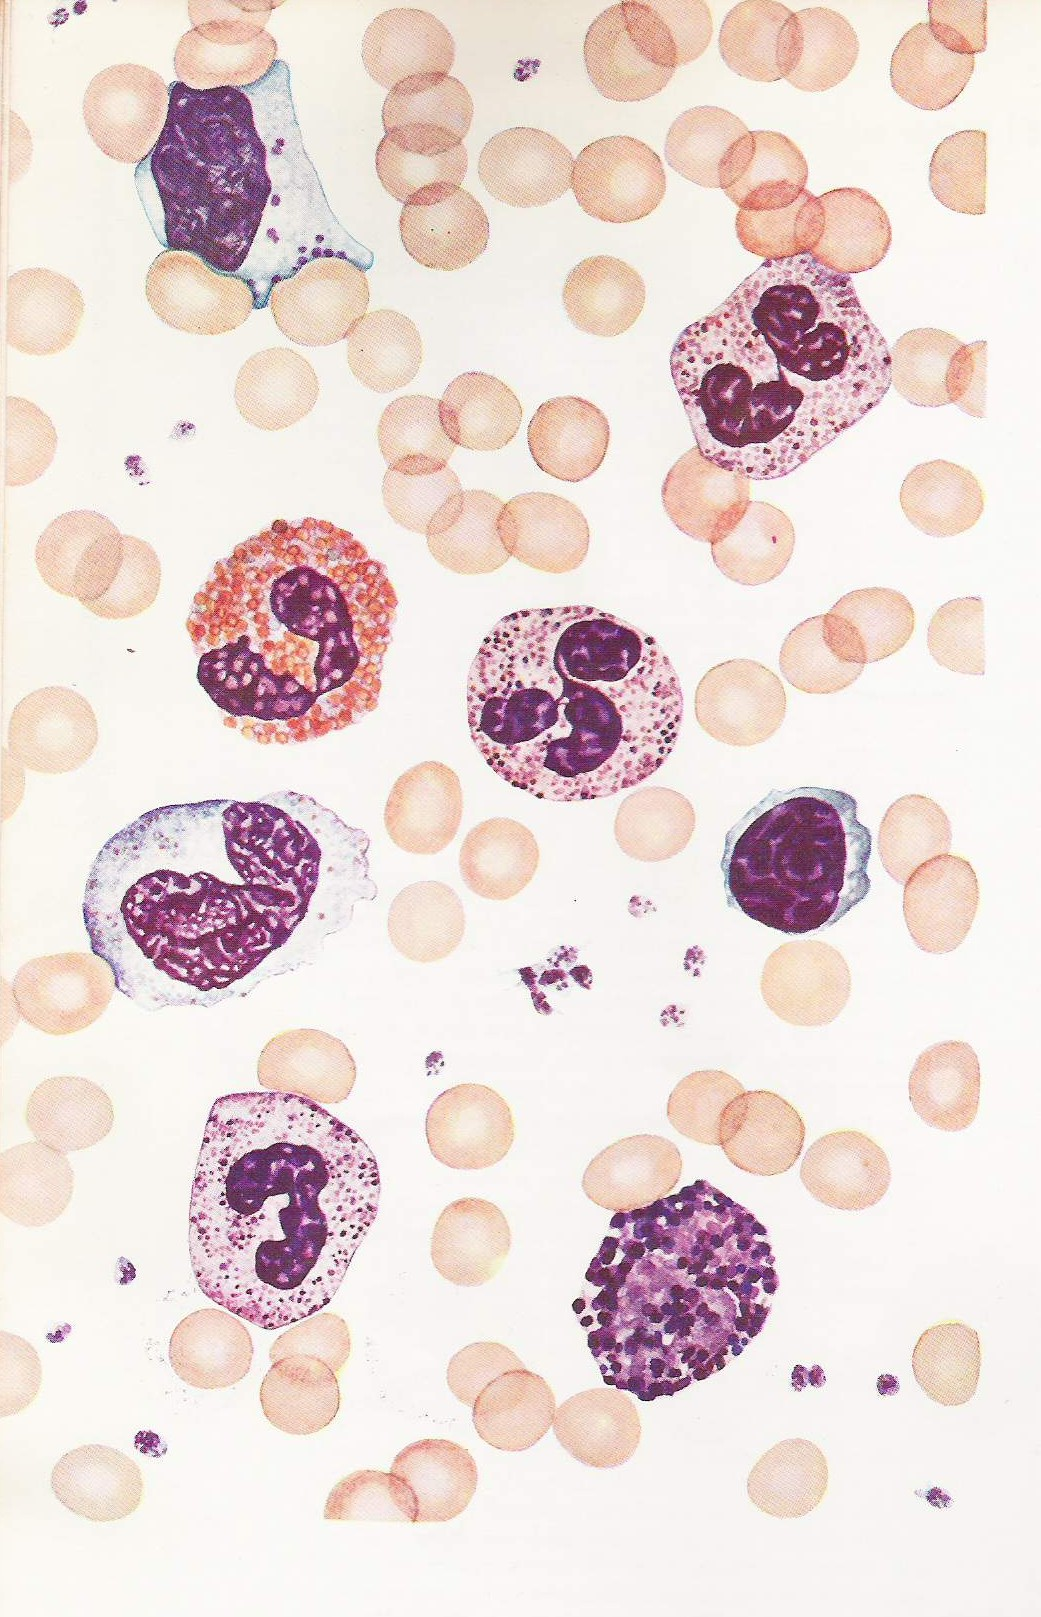 A ΠΕΡΙΦΕΡΙΚΟ ΑΙΜΑ ΑΝΘΡΩΠΟΥ B A. Erythrocytes D C B. Large lymphocyte with azurophilic grannules and deeply indented by erythrocytes E C. Neytrophil segmmented D.